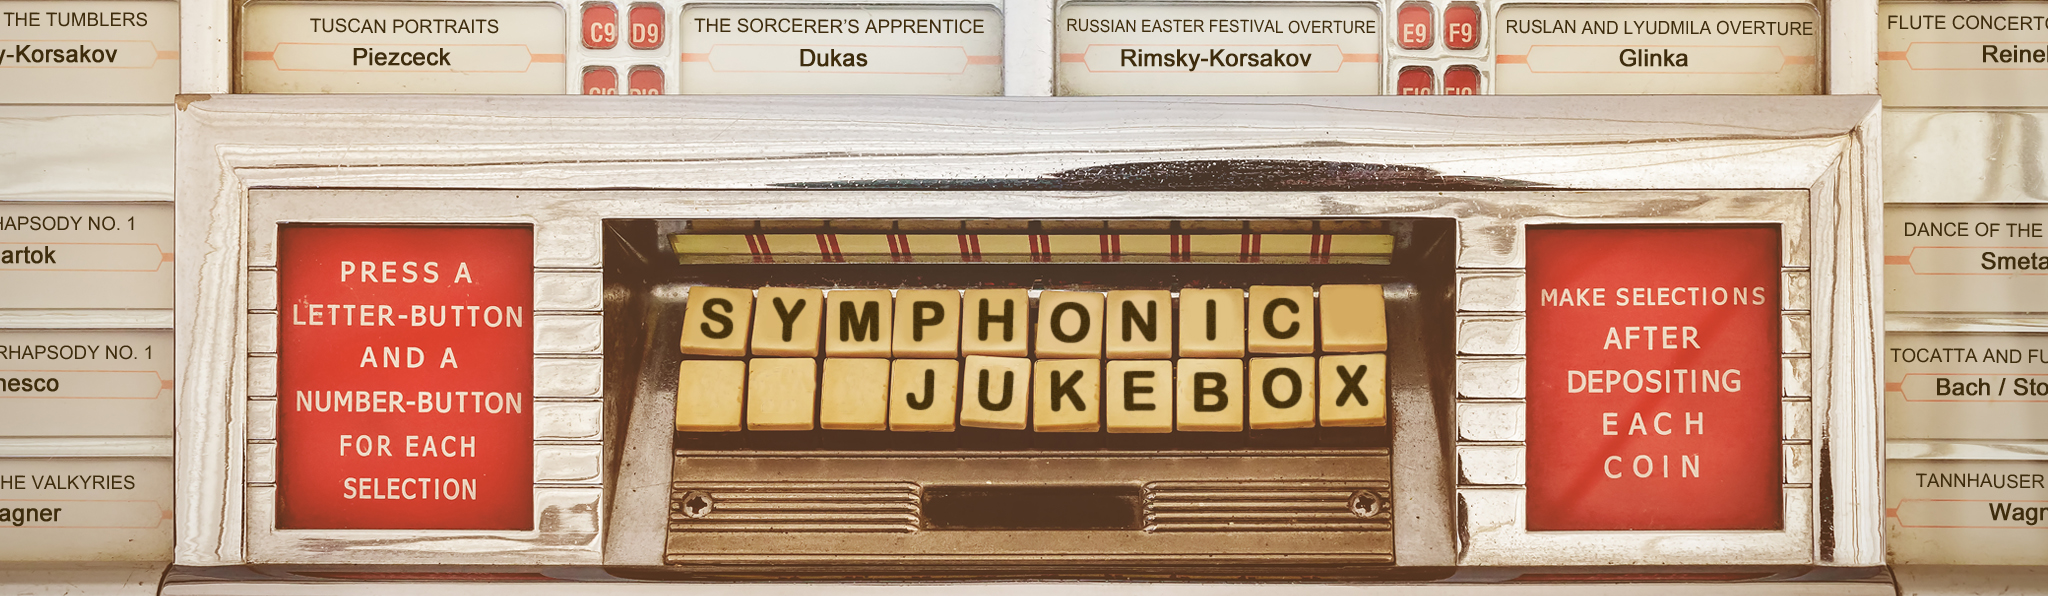 Symphonic Jukebox